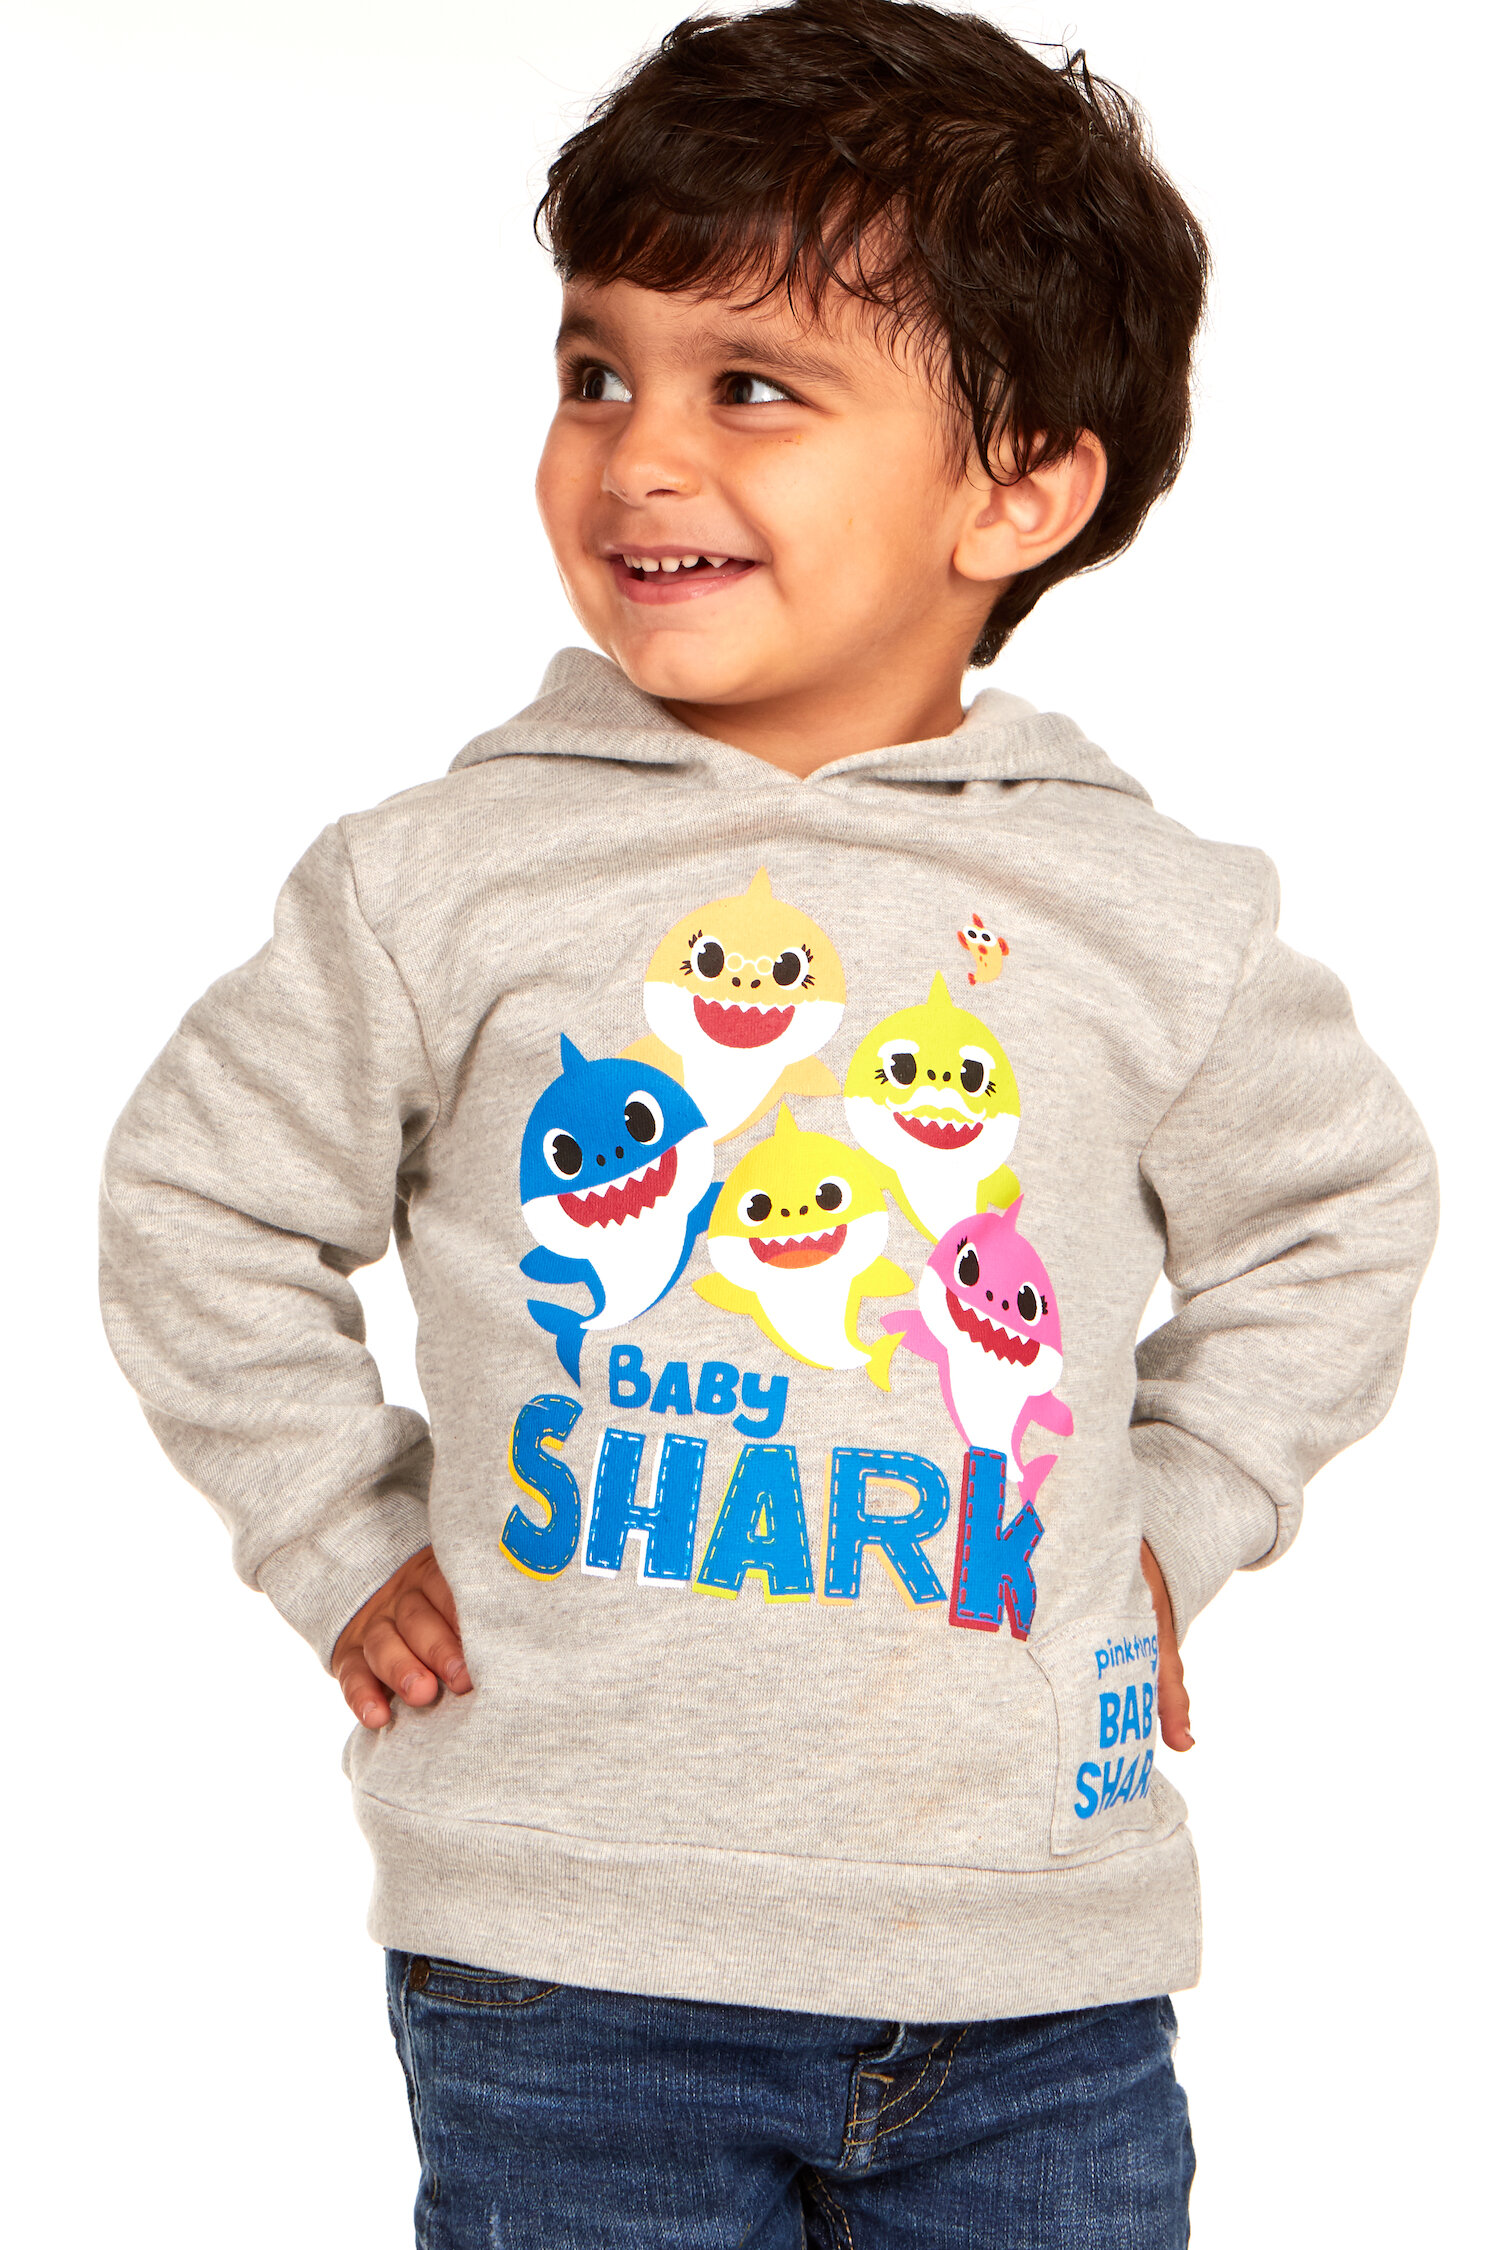 'BABY SHARK' Personalised t-shirt image,photo,logo,boy,girls,kids,gifts,clothes 